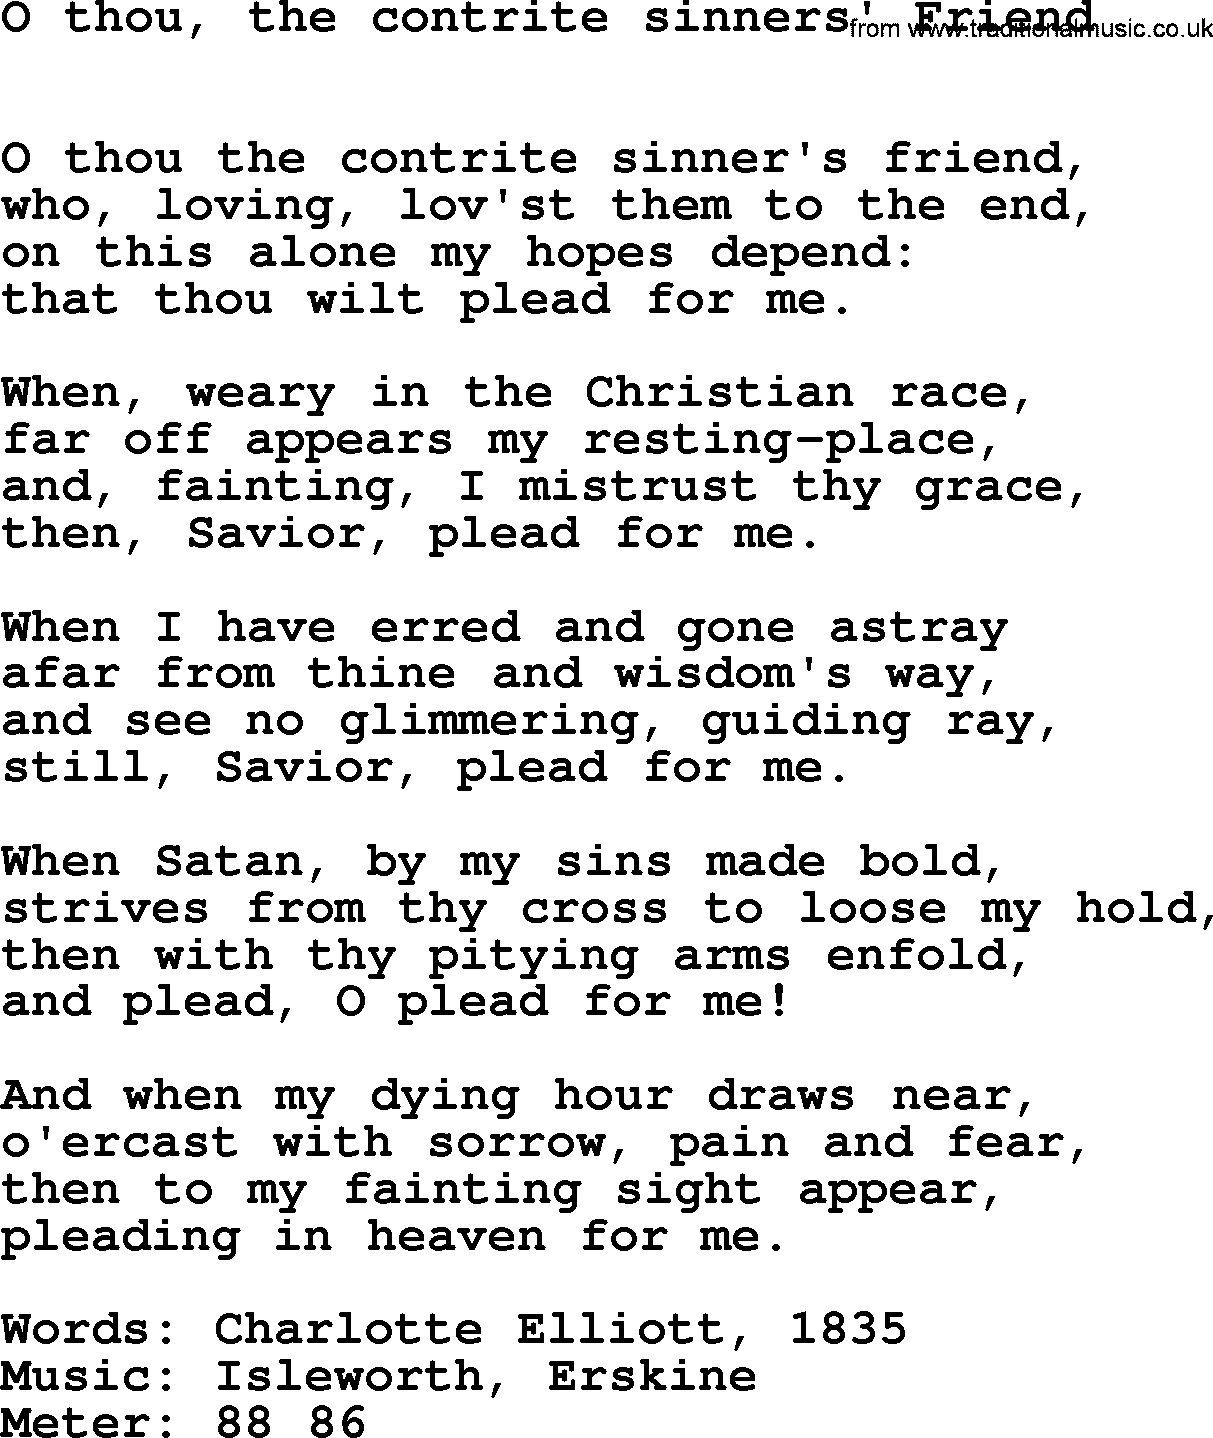 Book of Common Praise Hymn: O Thou, The Contrite Sinners' Friend.txt lyrics with midi music